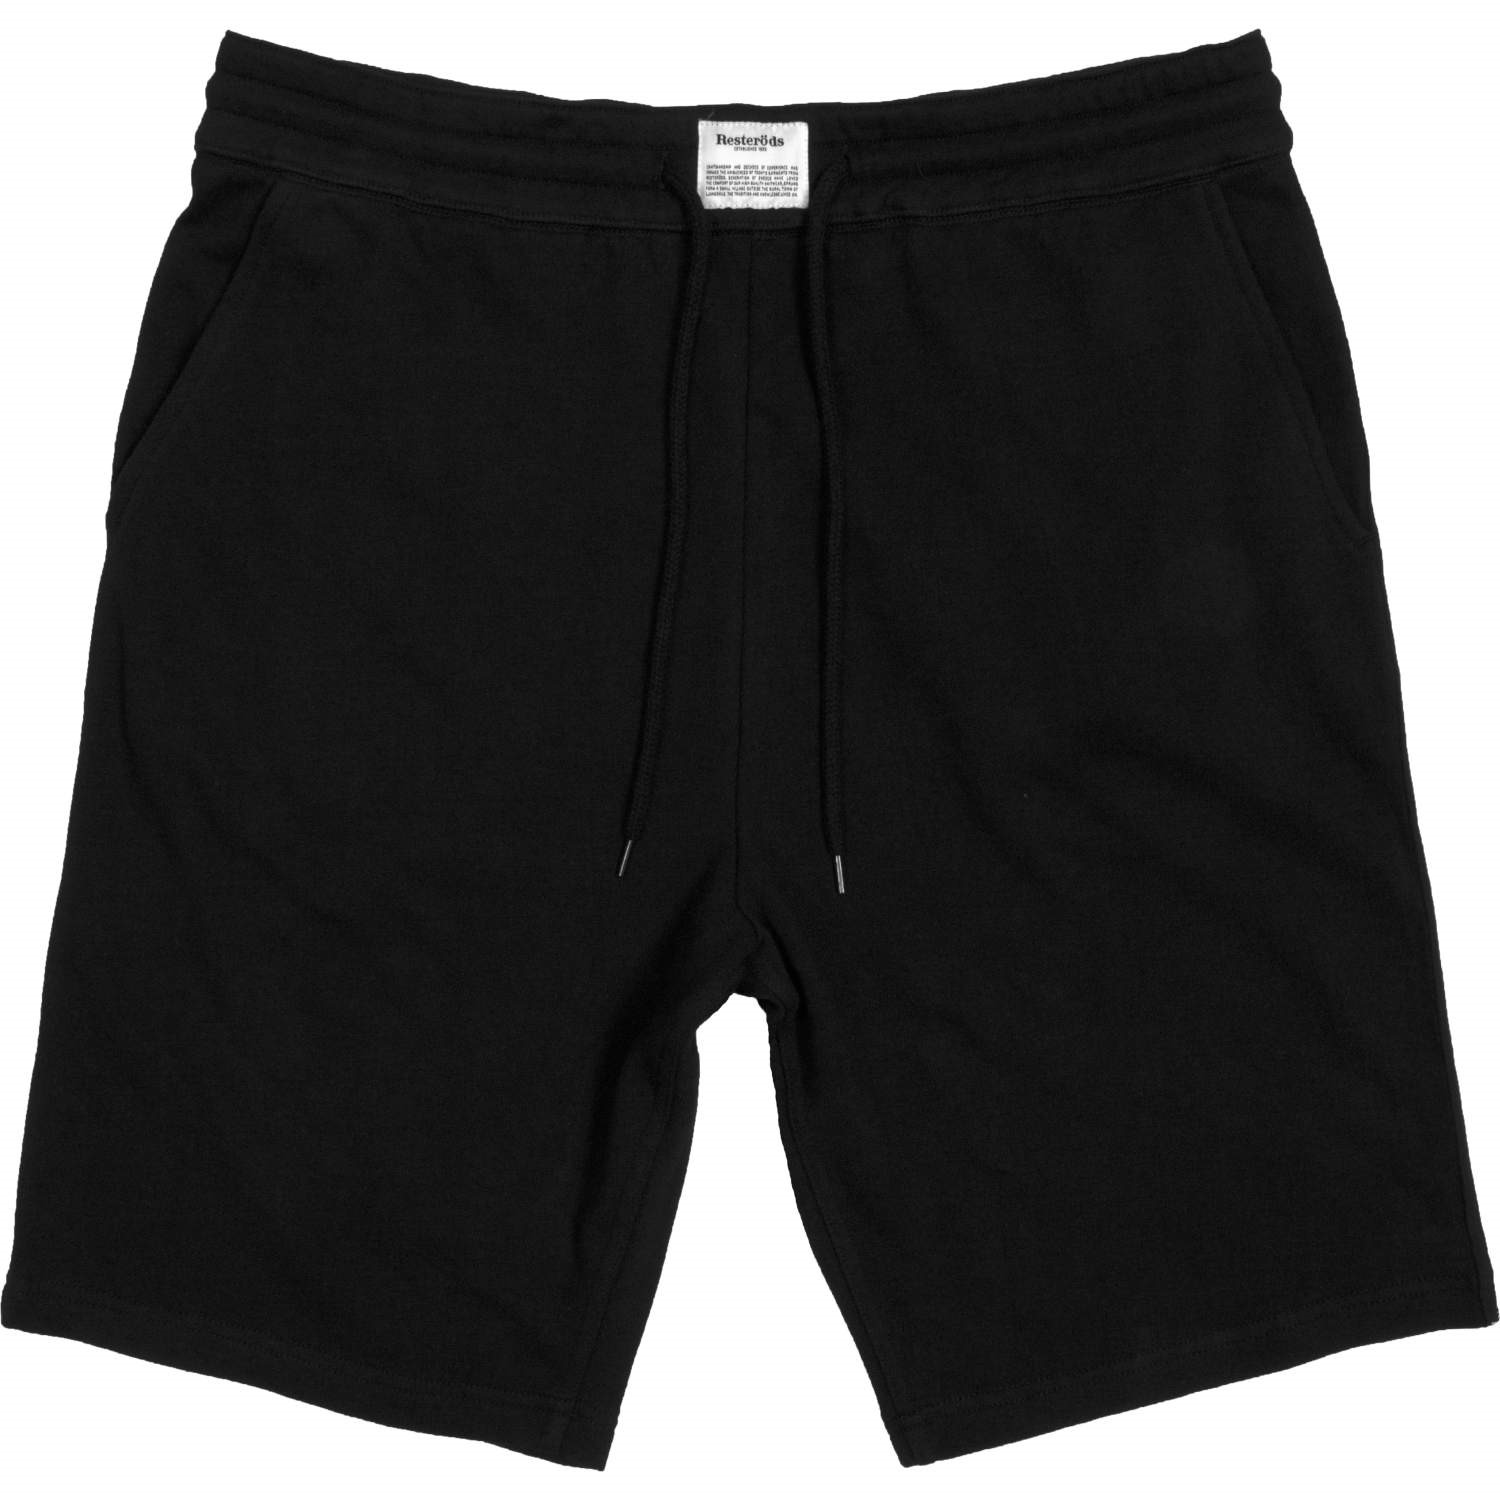 Resteröds Original Sweat Shorts